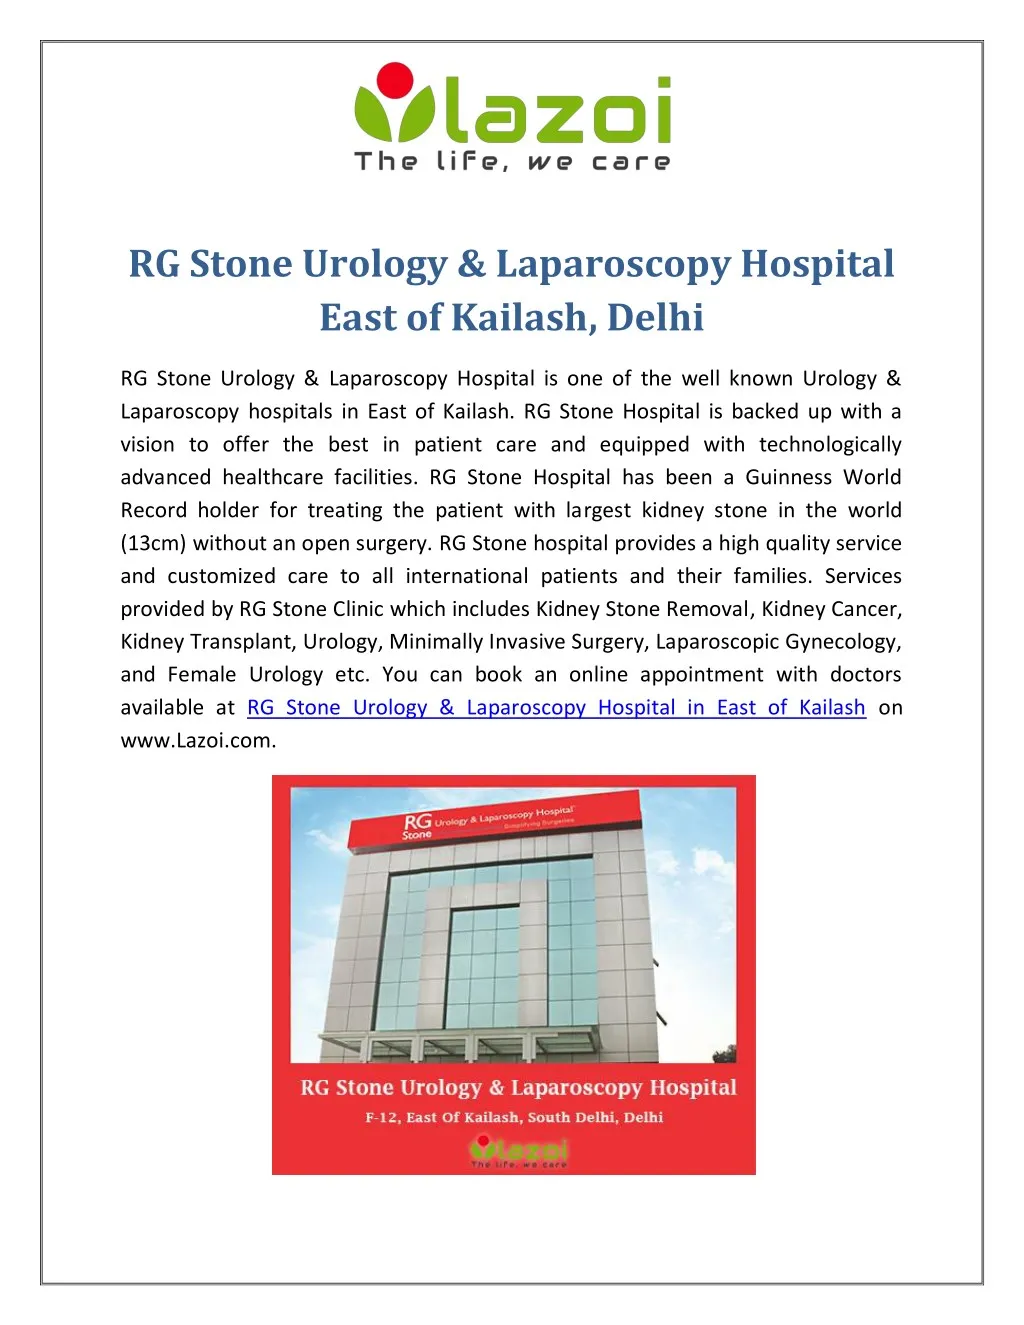 rg stone urology laparoscopy hospital east